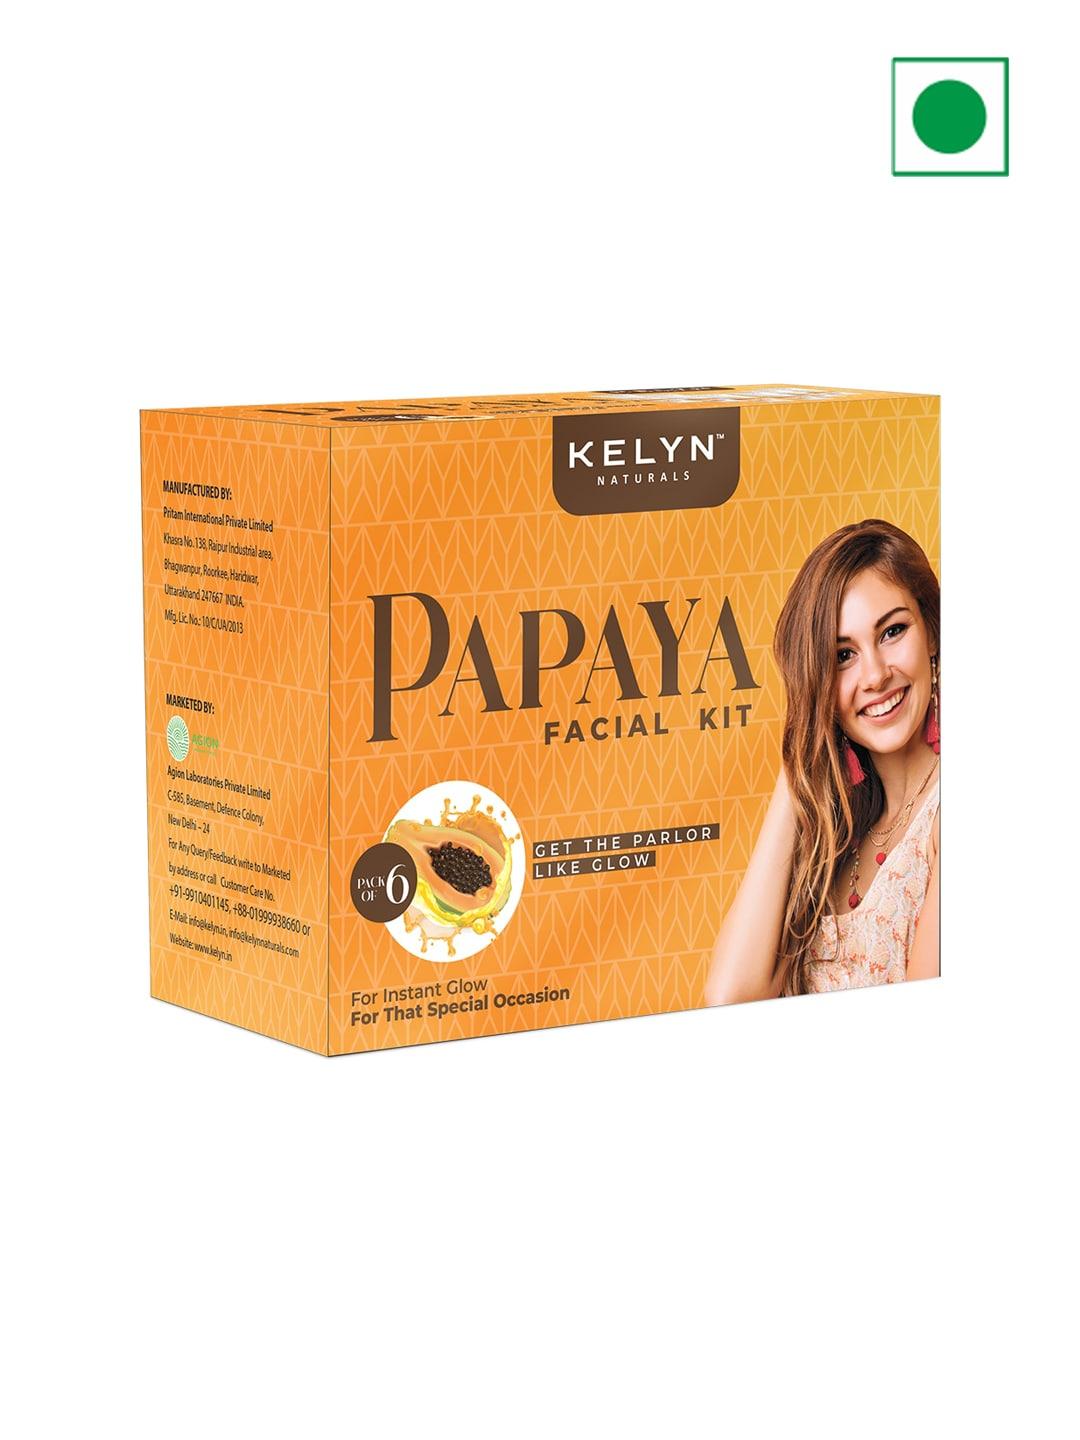 kelyn papaya facial kit for instant glow - 10g each